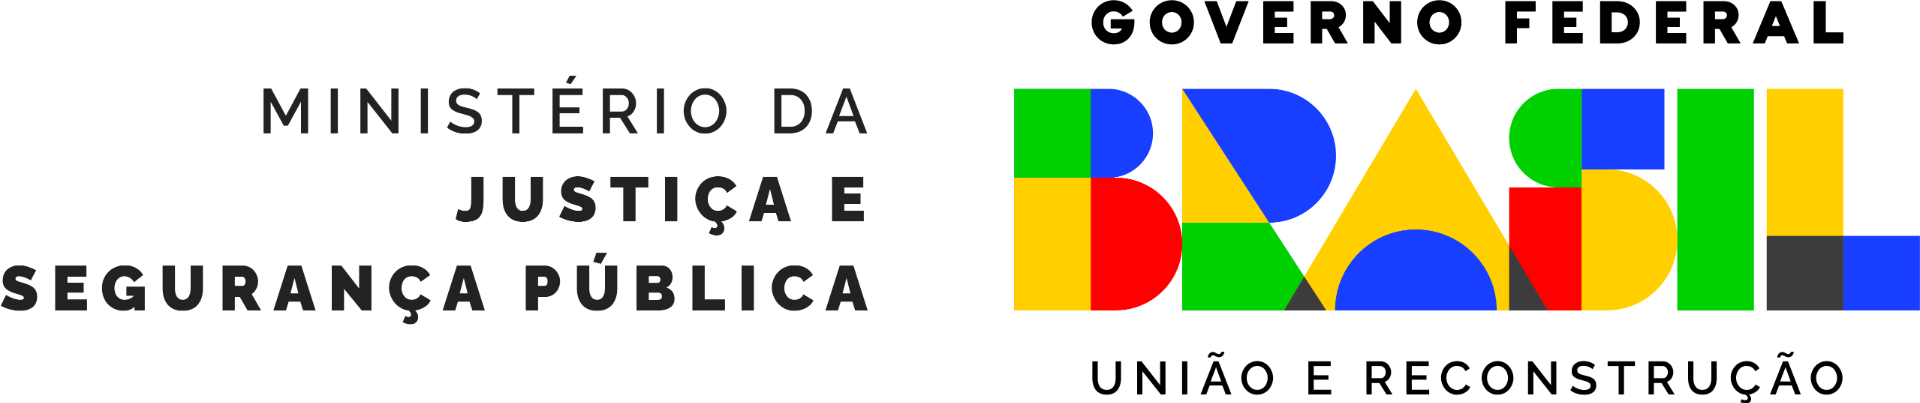 Logo cor preta